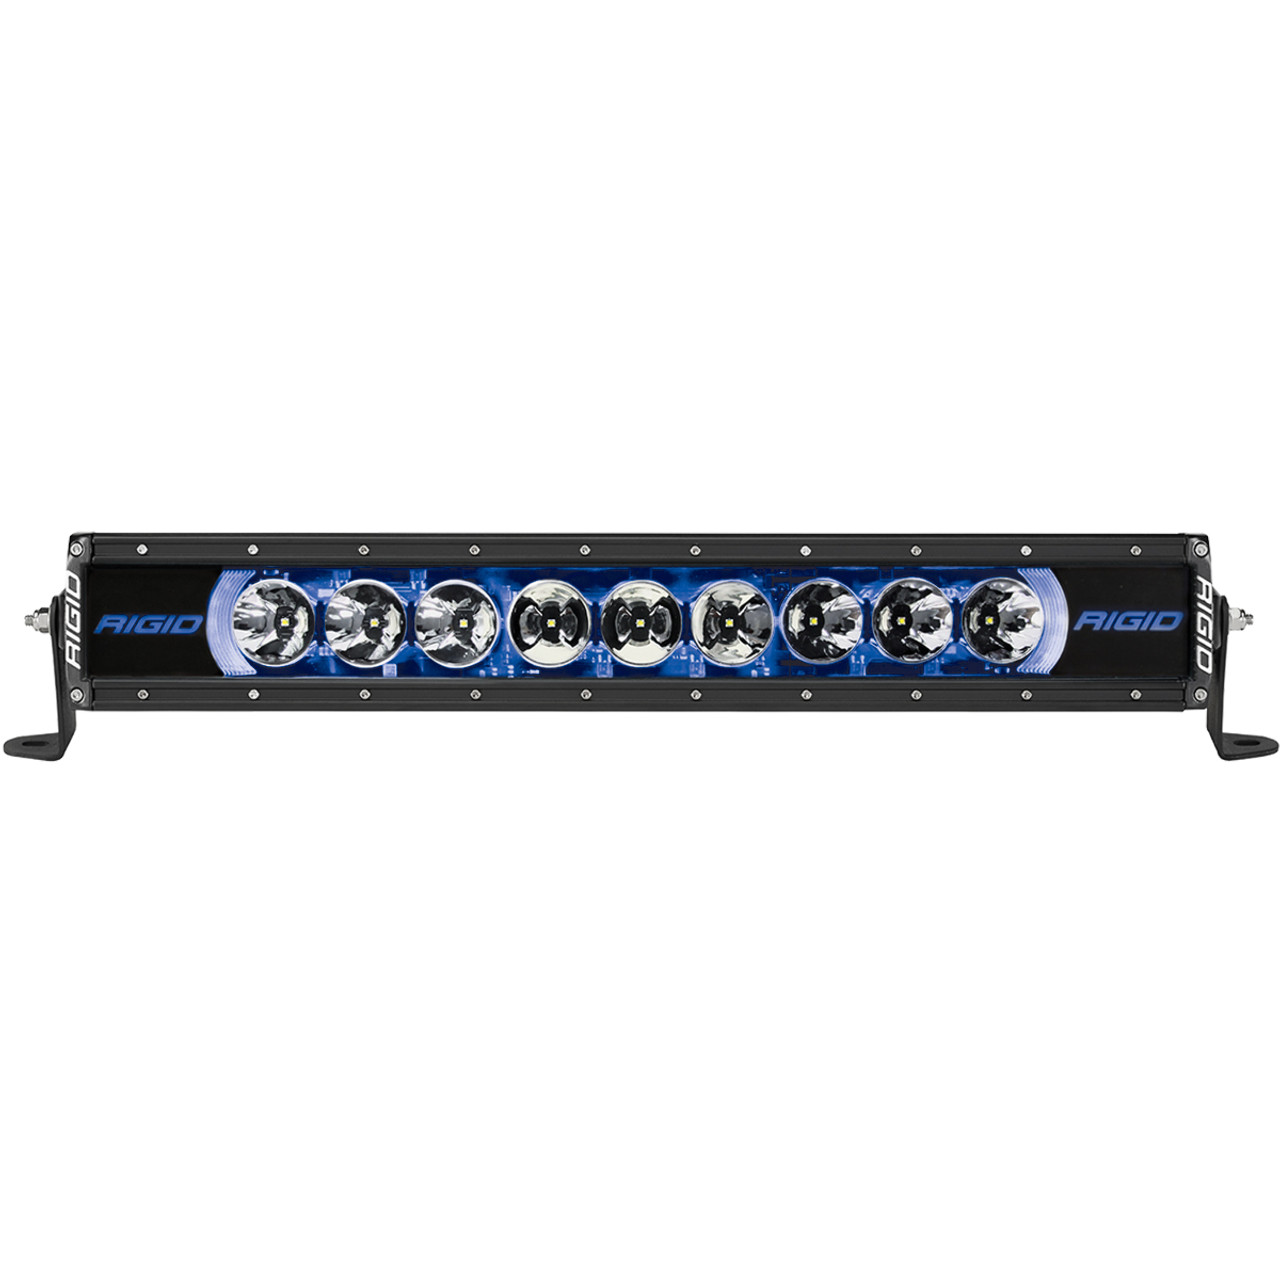 RIGID Industries 220053 Radiance+ 20"  RGBW Light Bar 8 Backlight Options